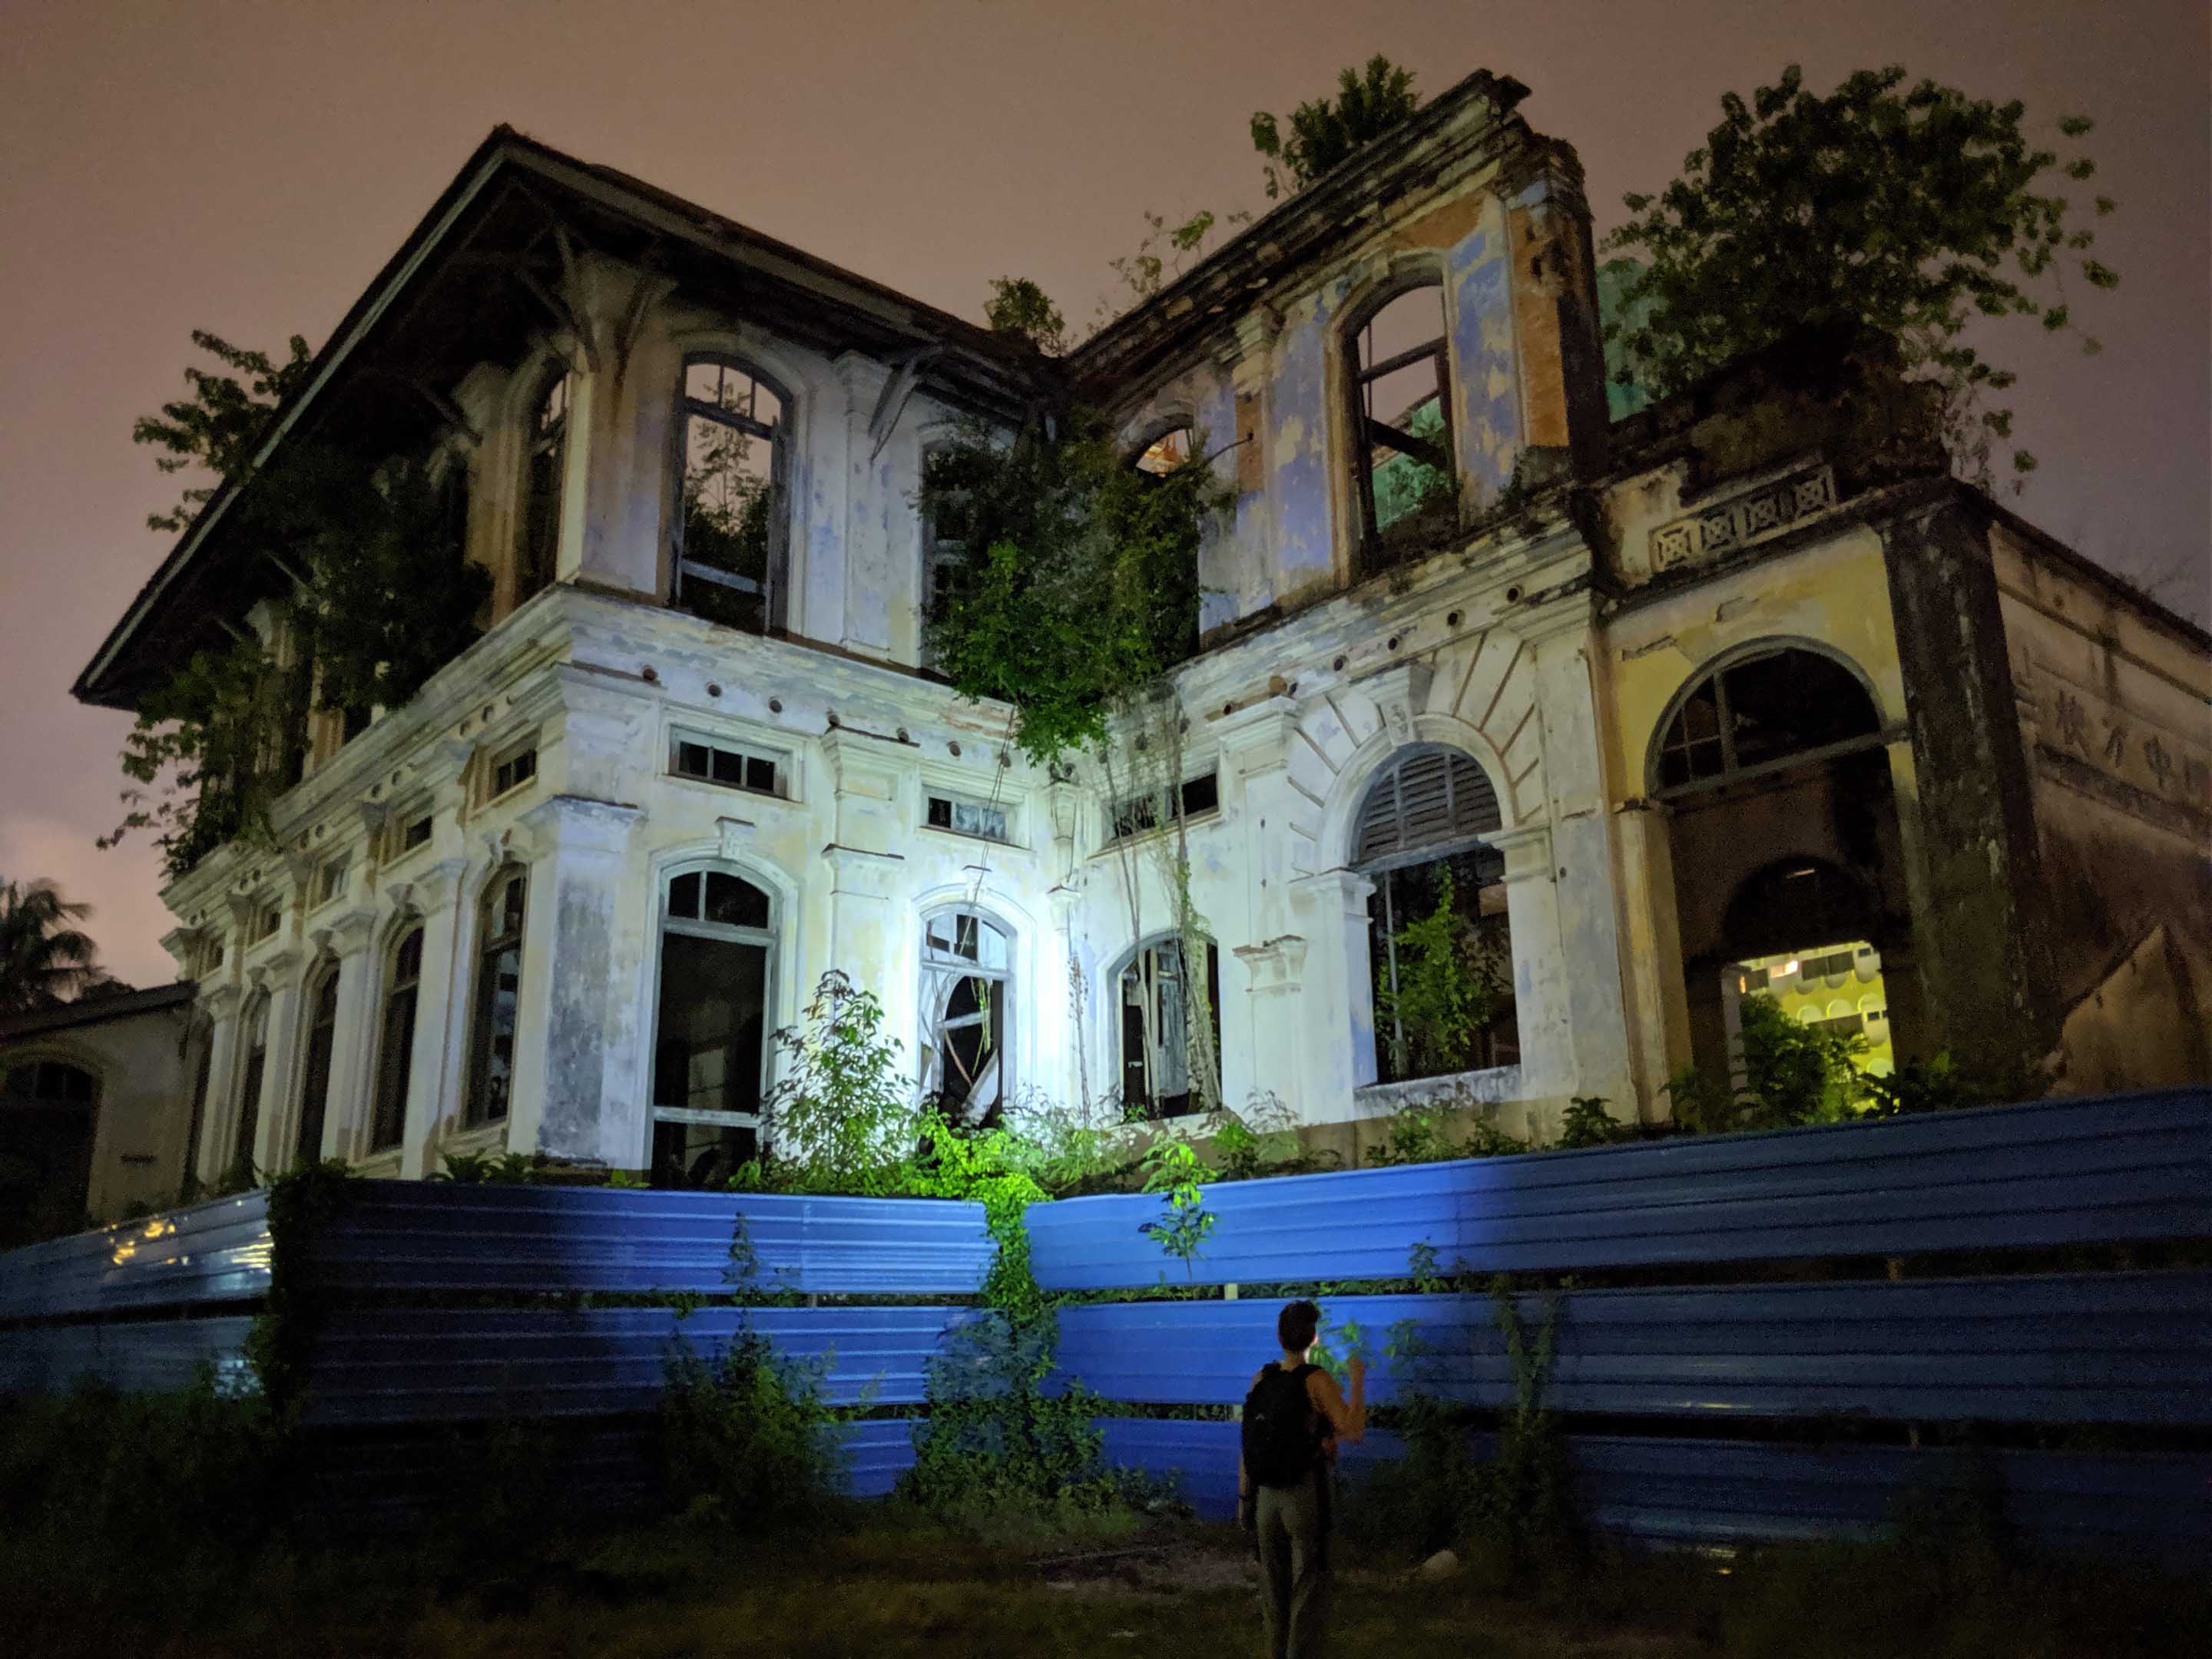 Shih Chung haunted school